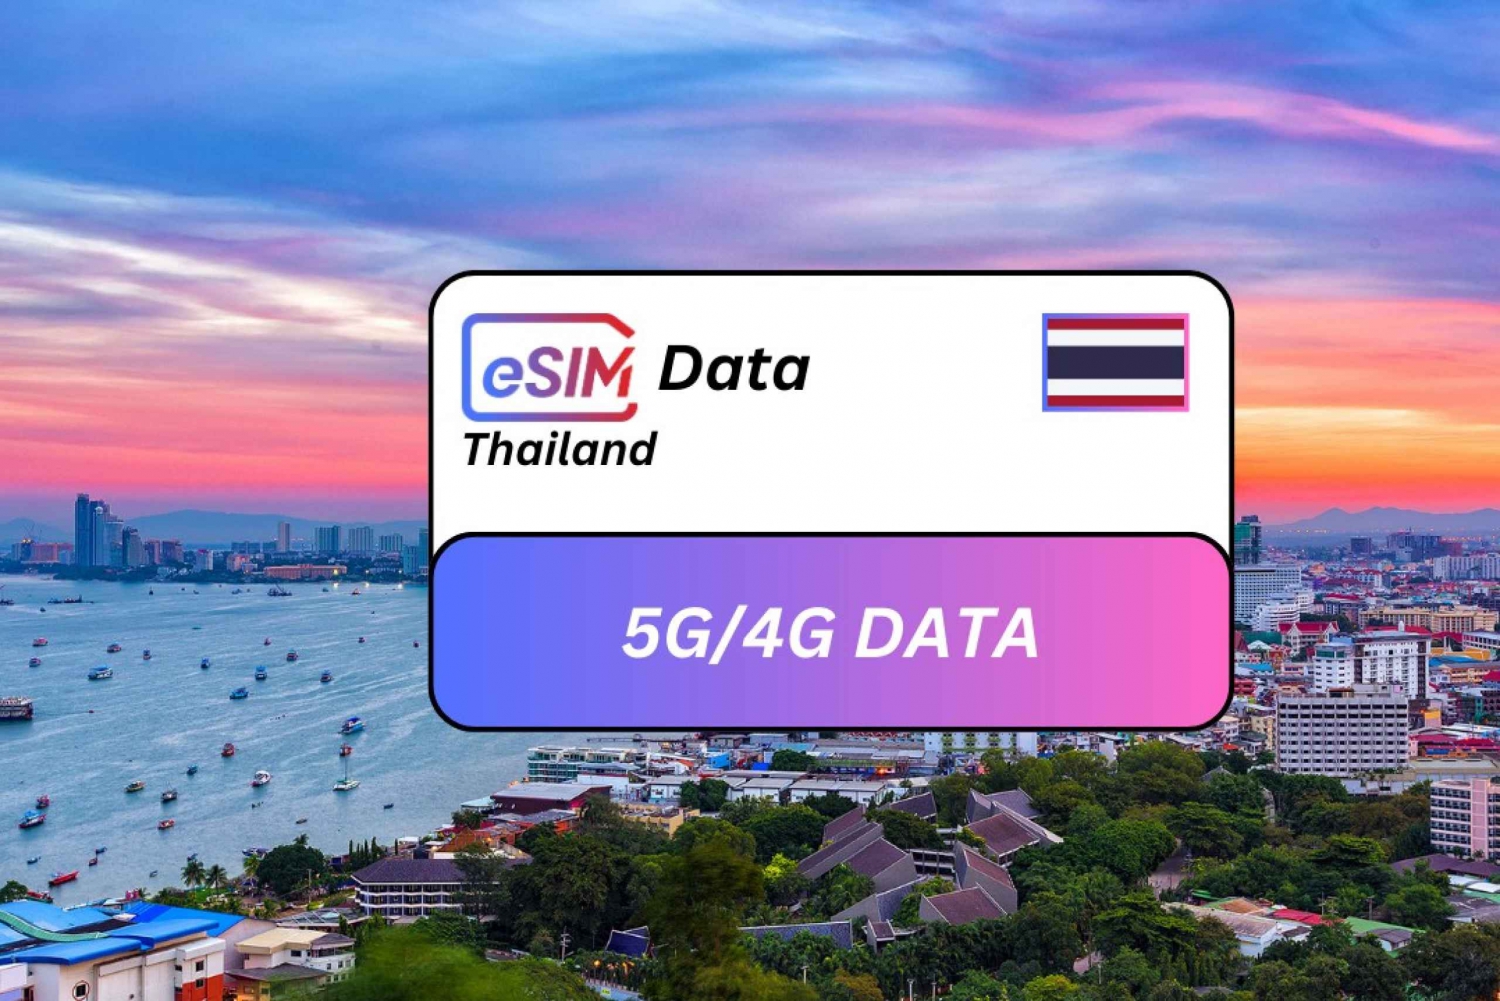 Pattaya: Thailand eSIM Roaming Data Plan